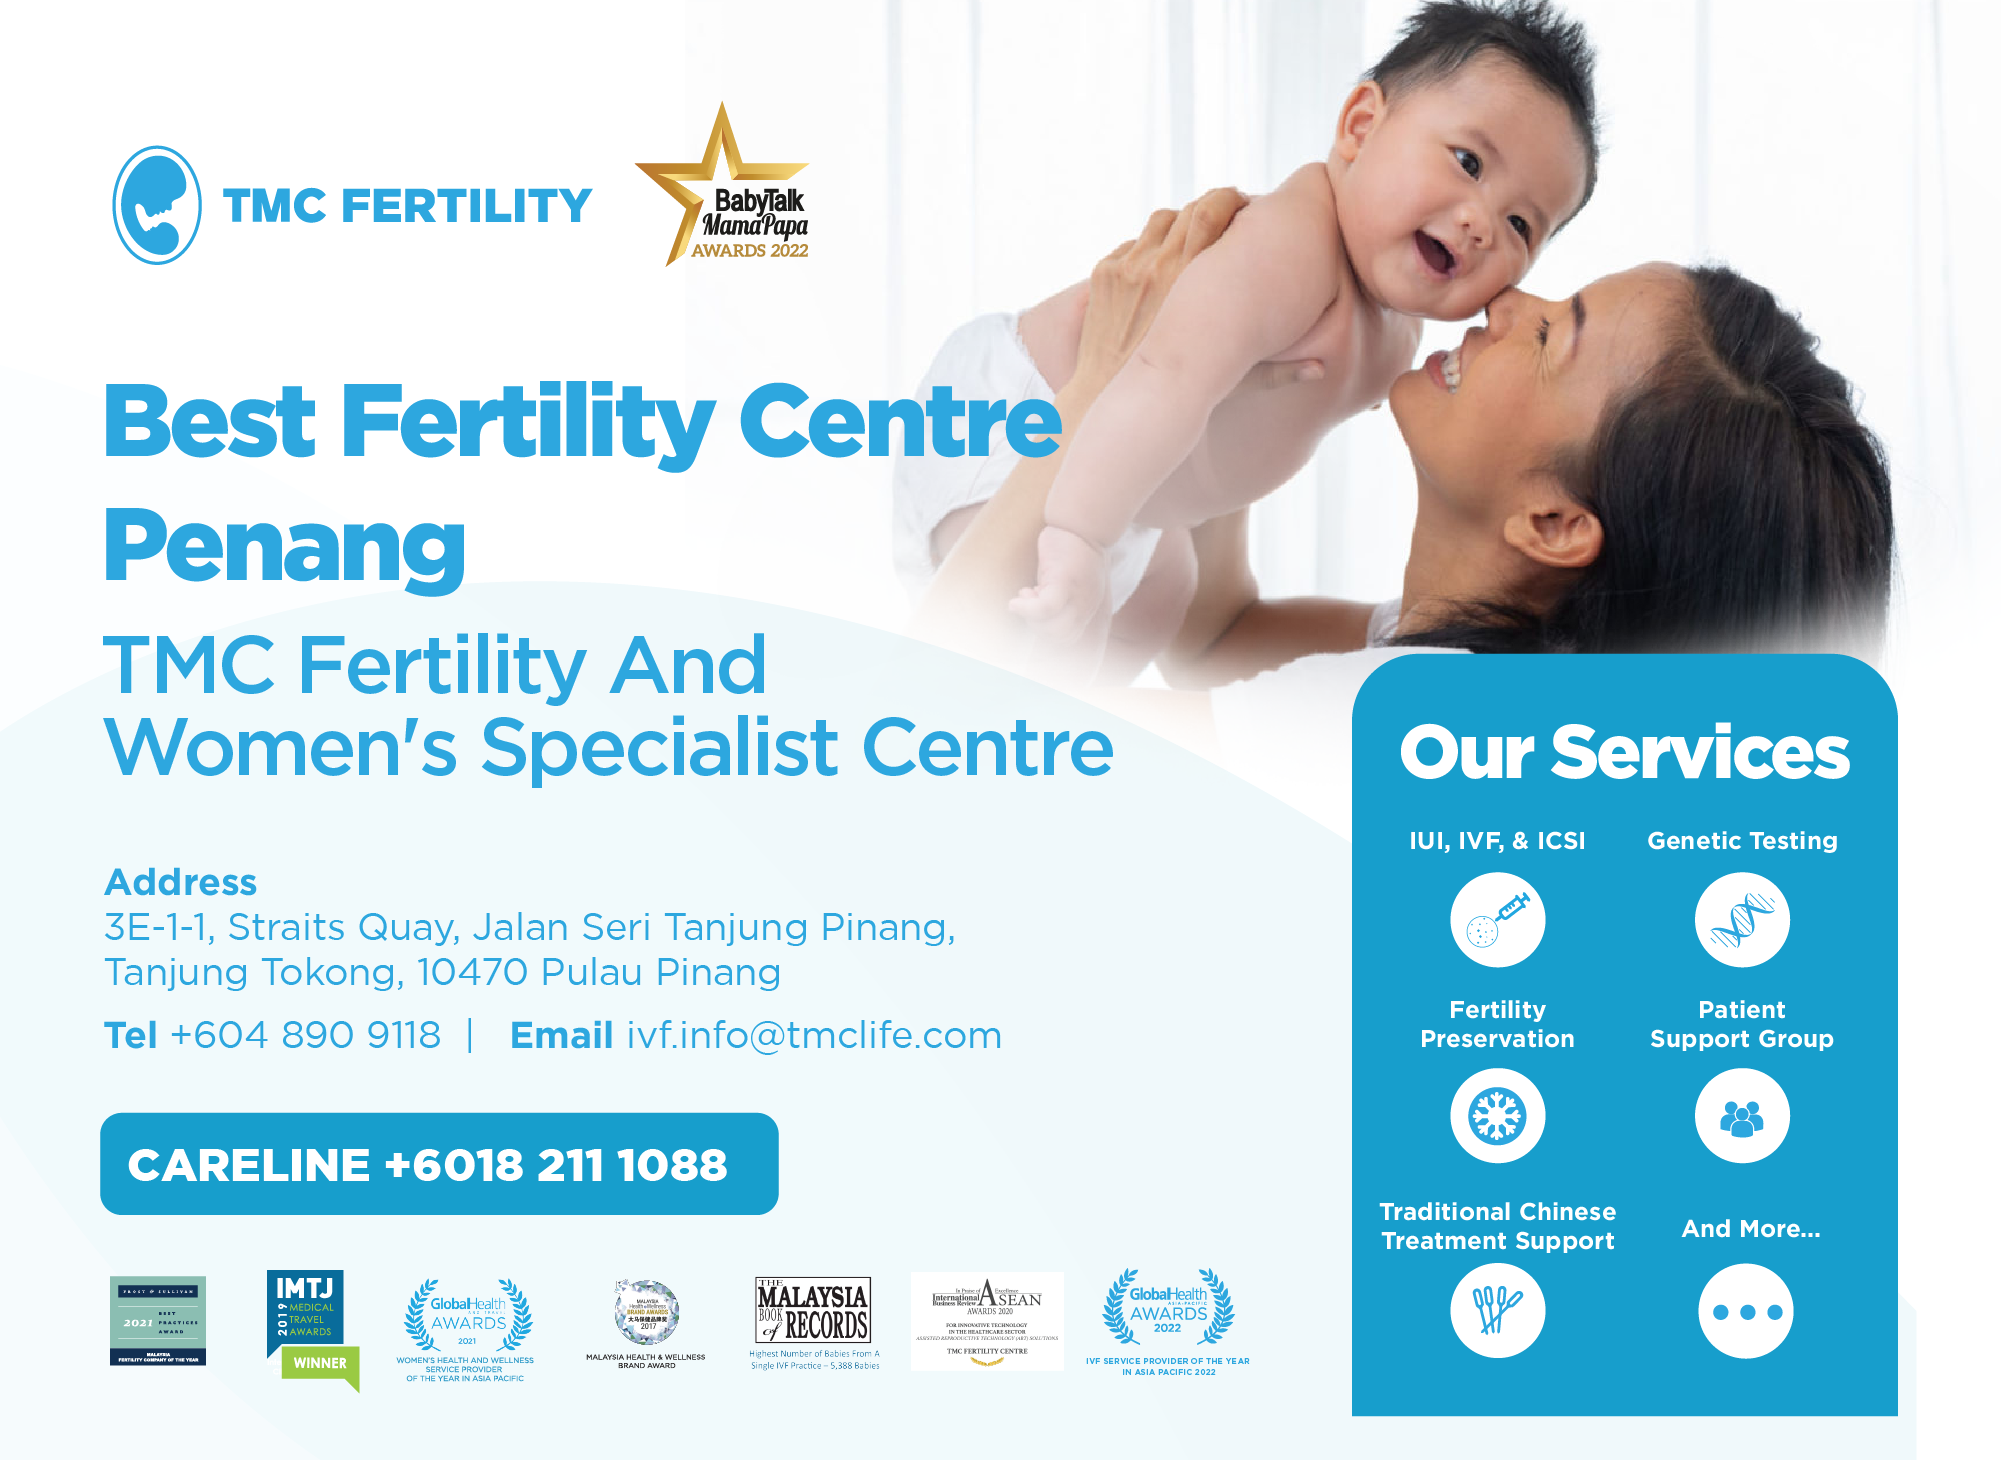 Begin Your Parenthood Journey with TMC Fertility